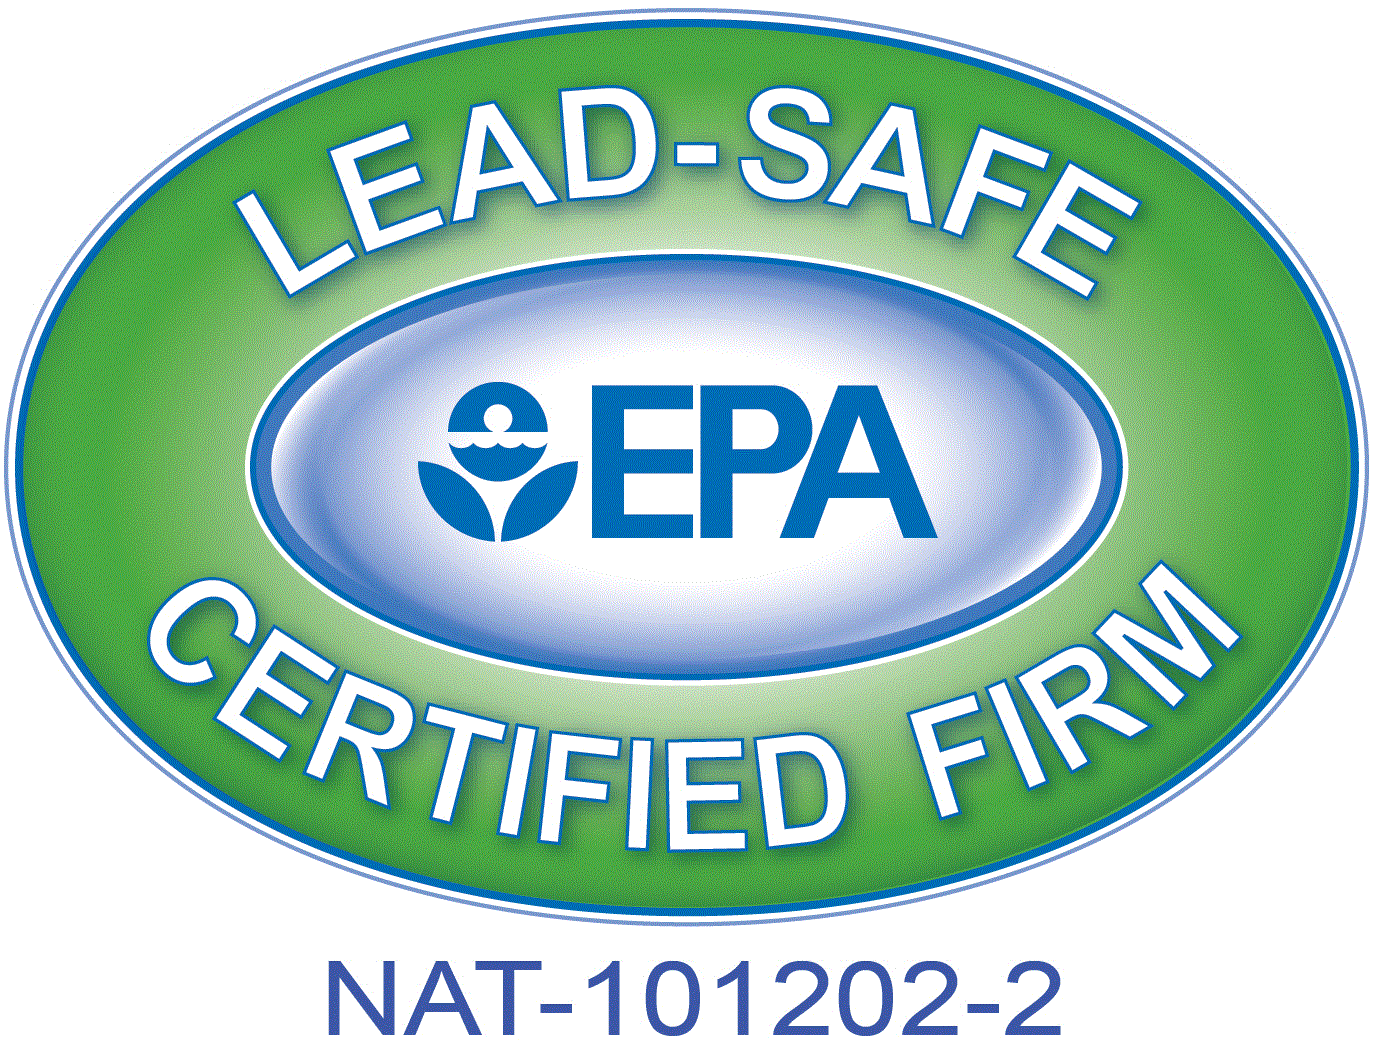 epa certified badge